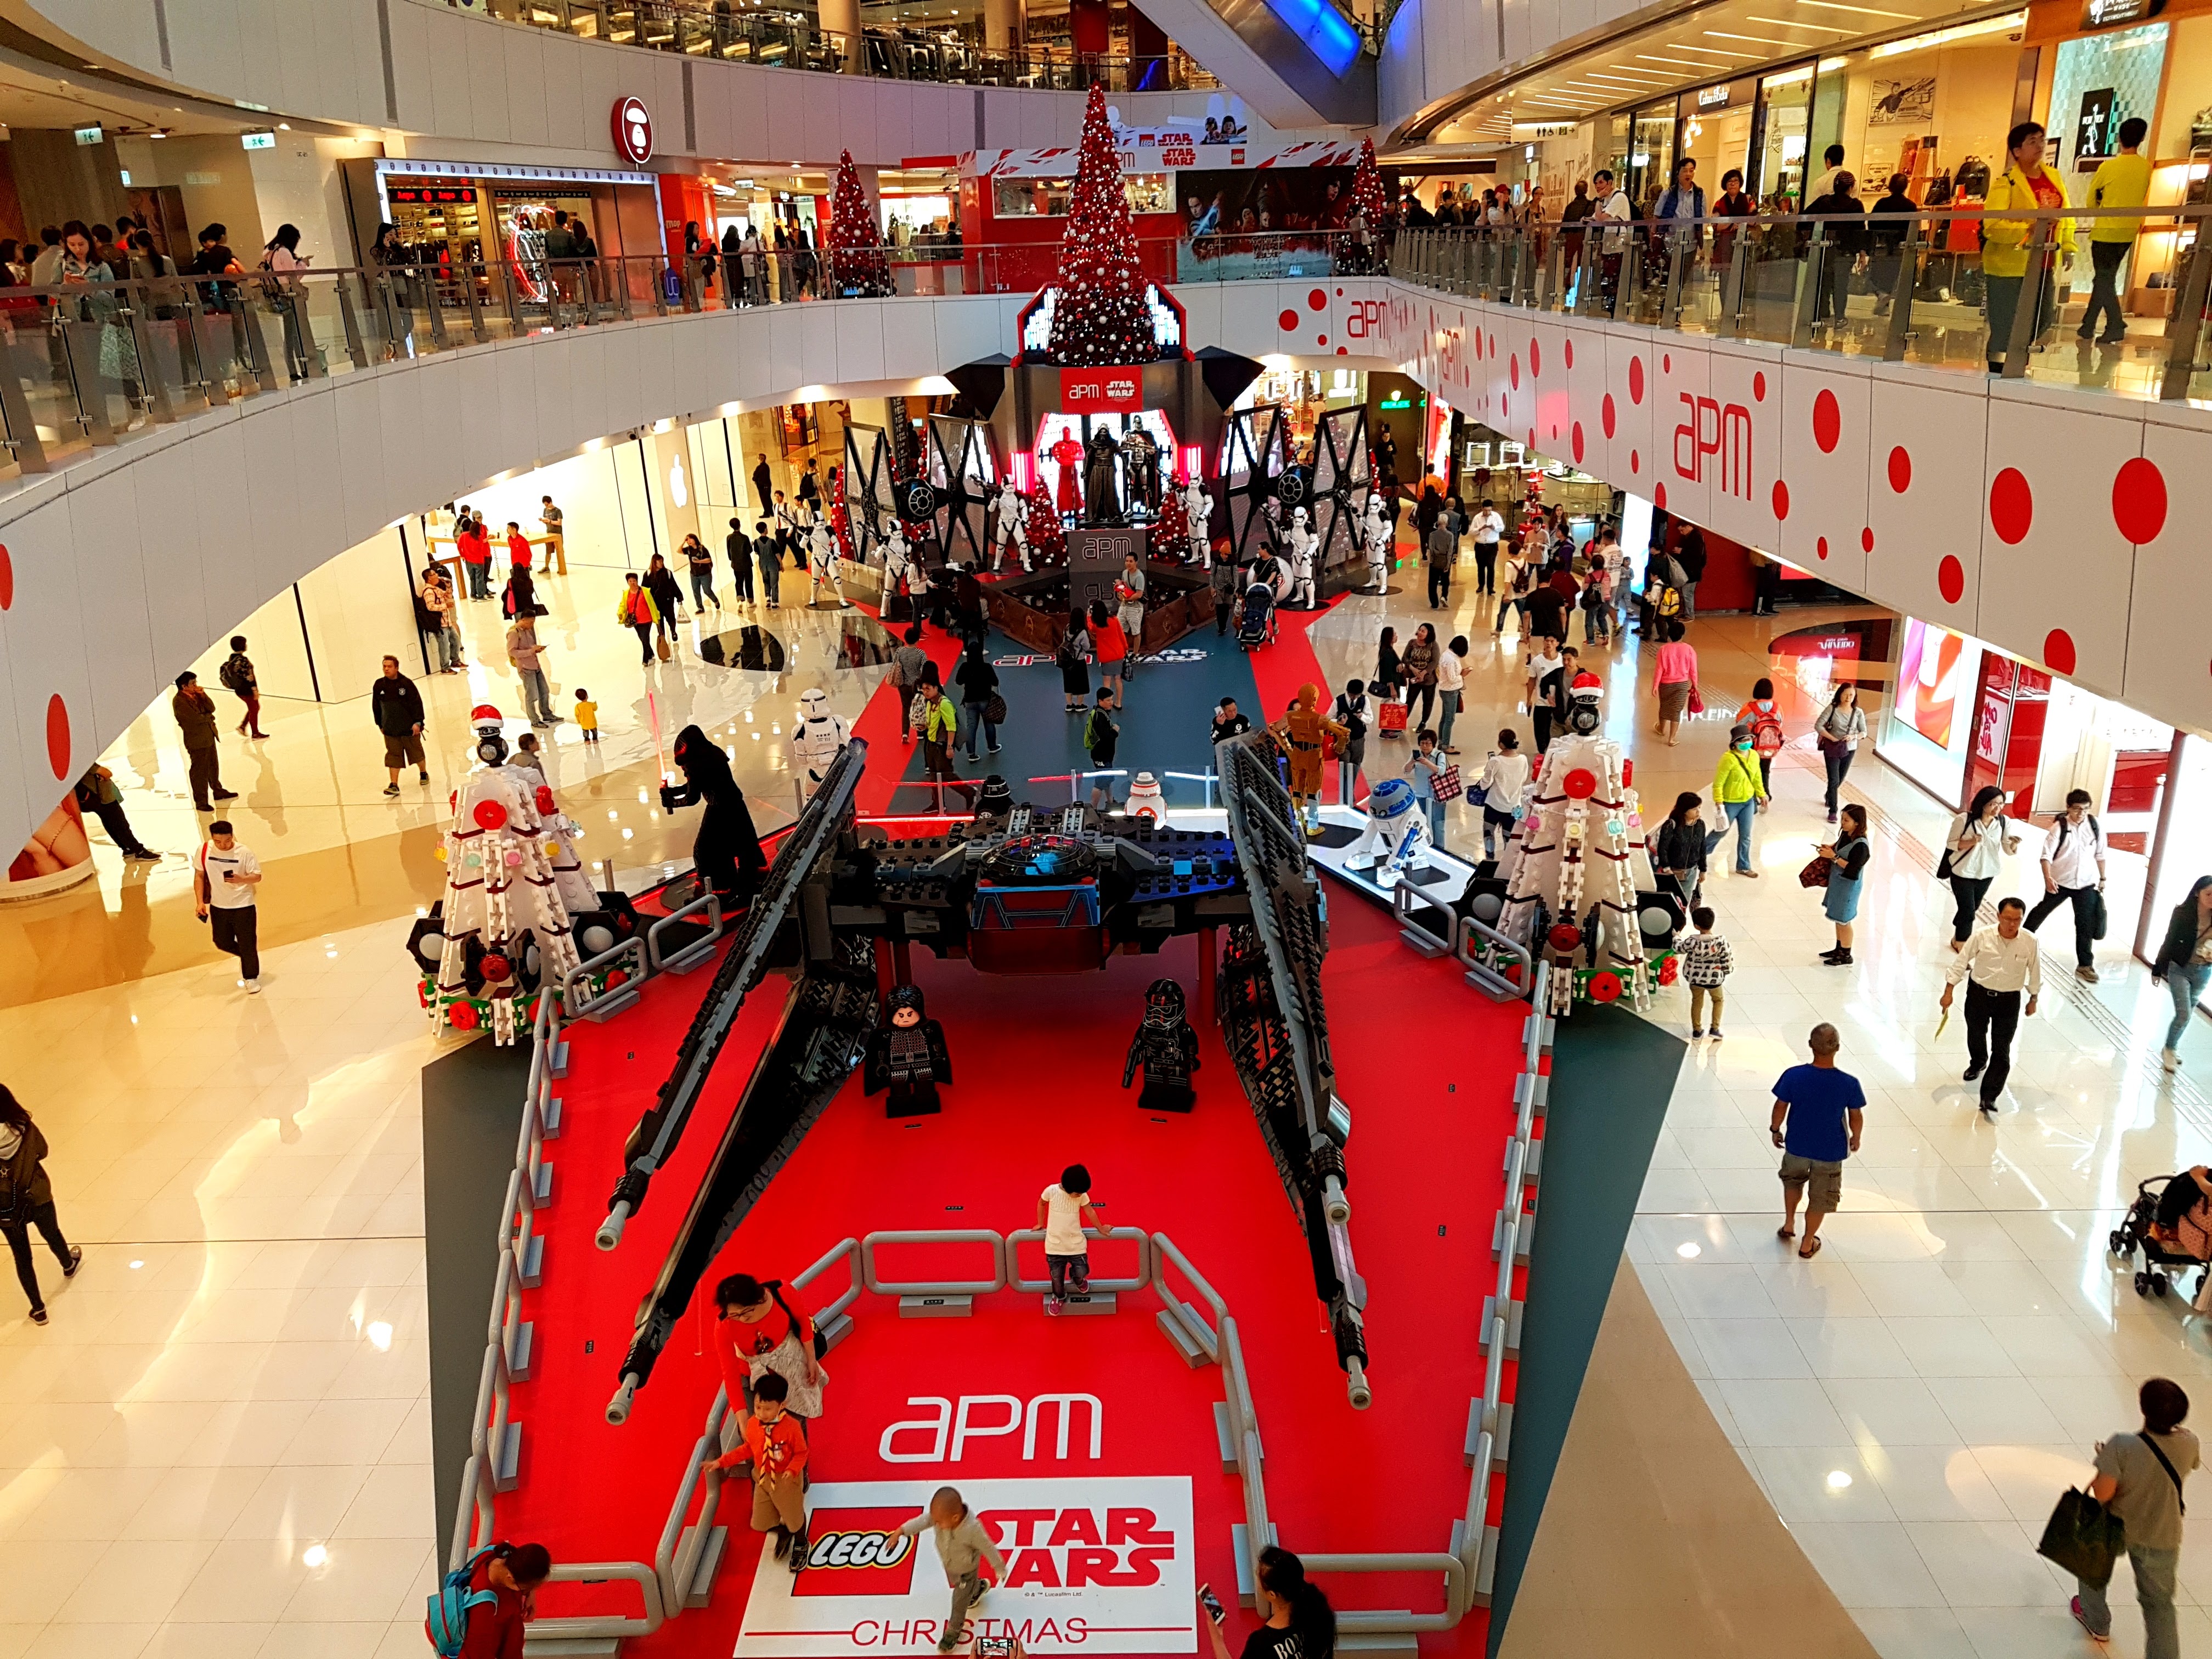 StarWARS themed installation at APM mall Kwon Tong